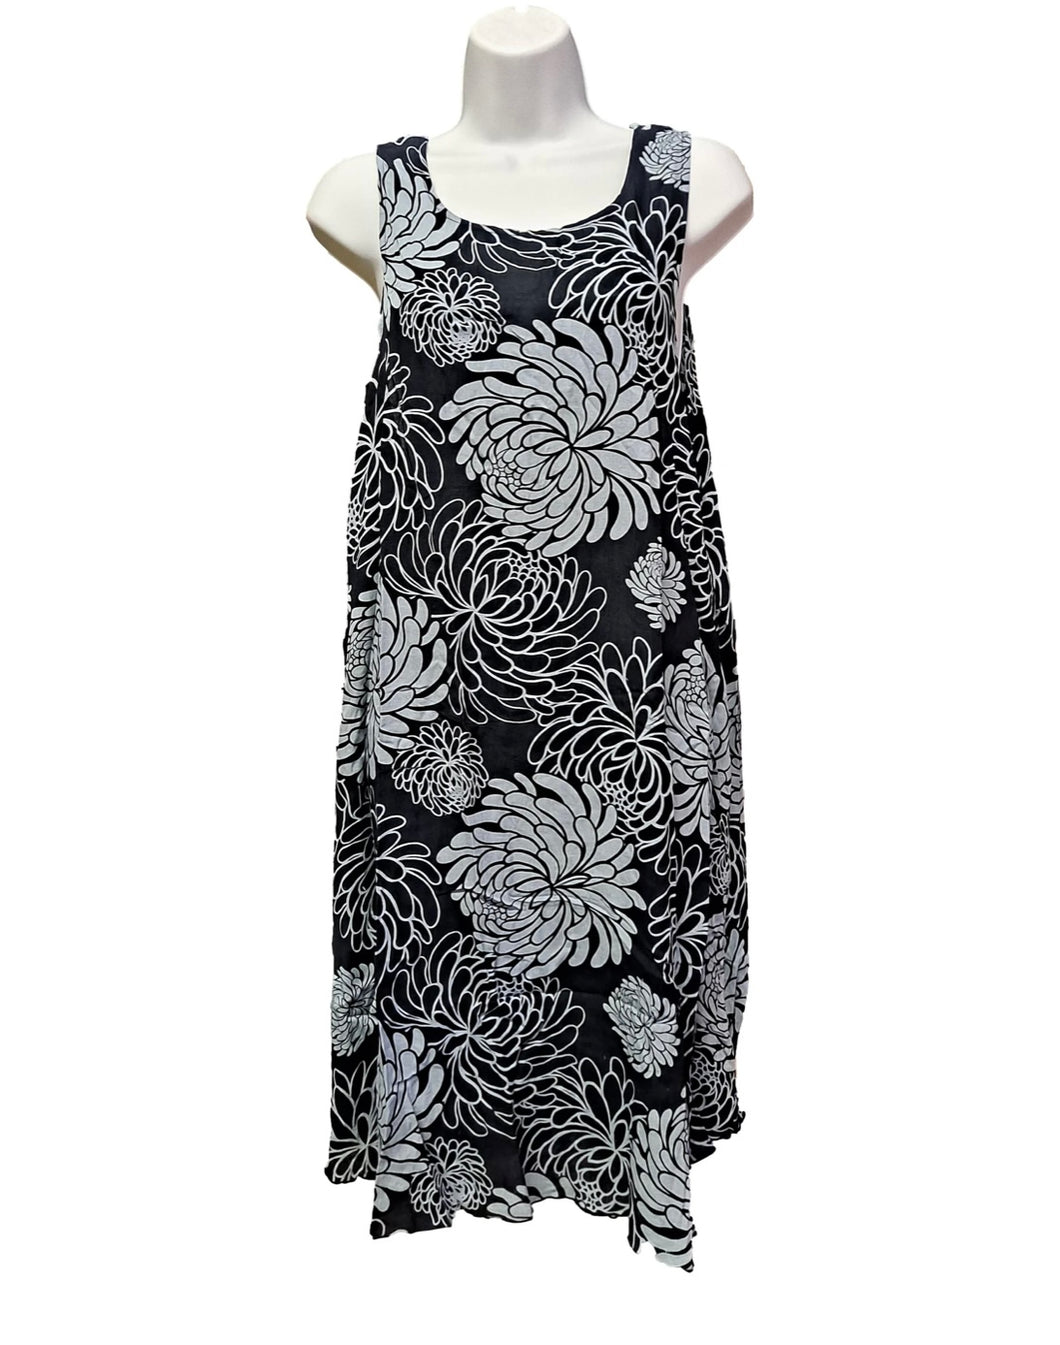 Chrysanthemum Cabana Pocket Dress (one size)